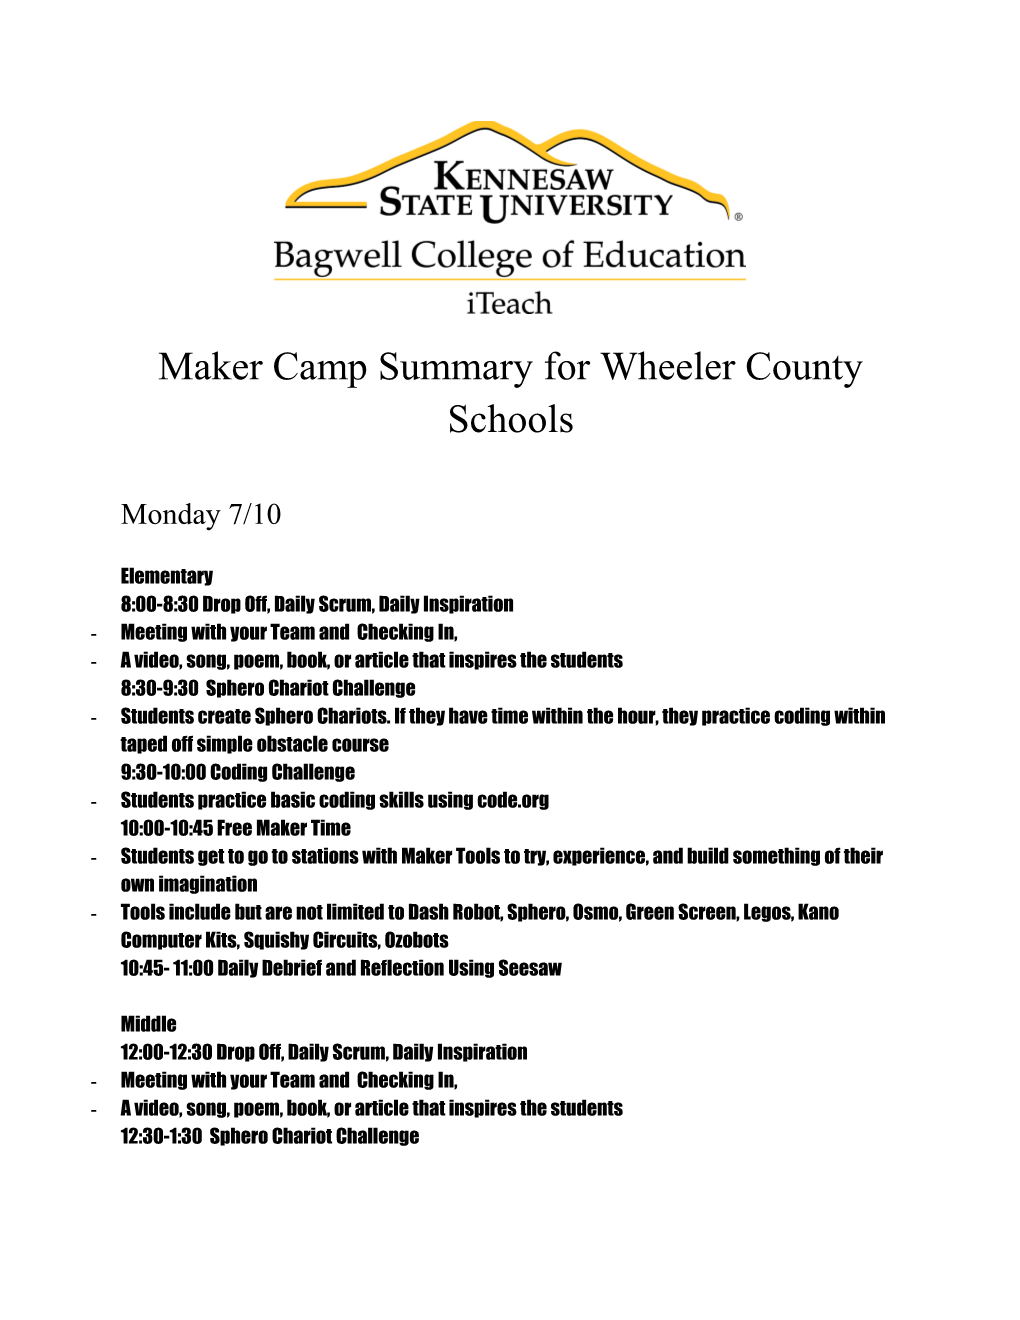 Maker Camp Summary for Wheeler County Schools